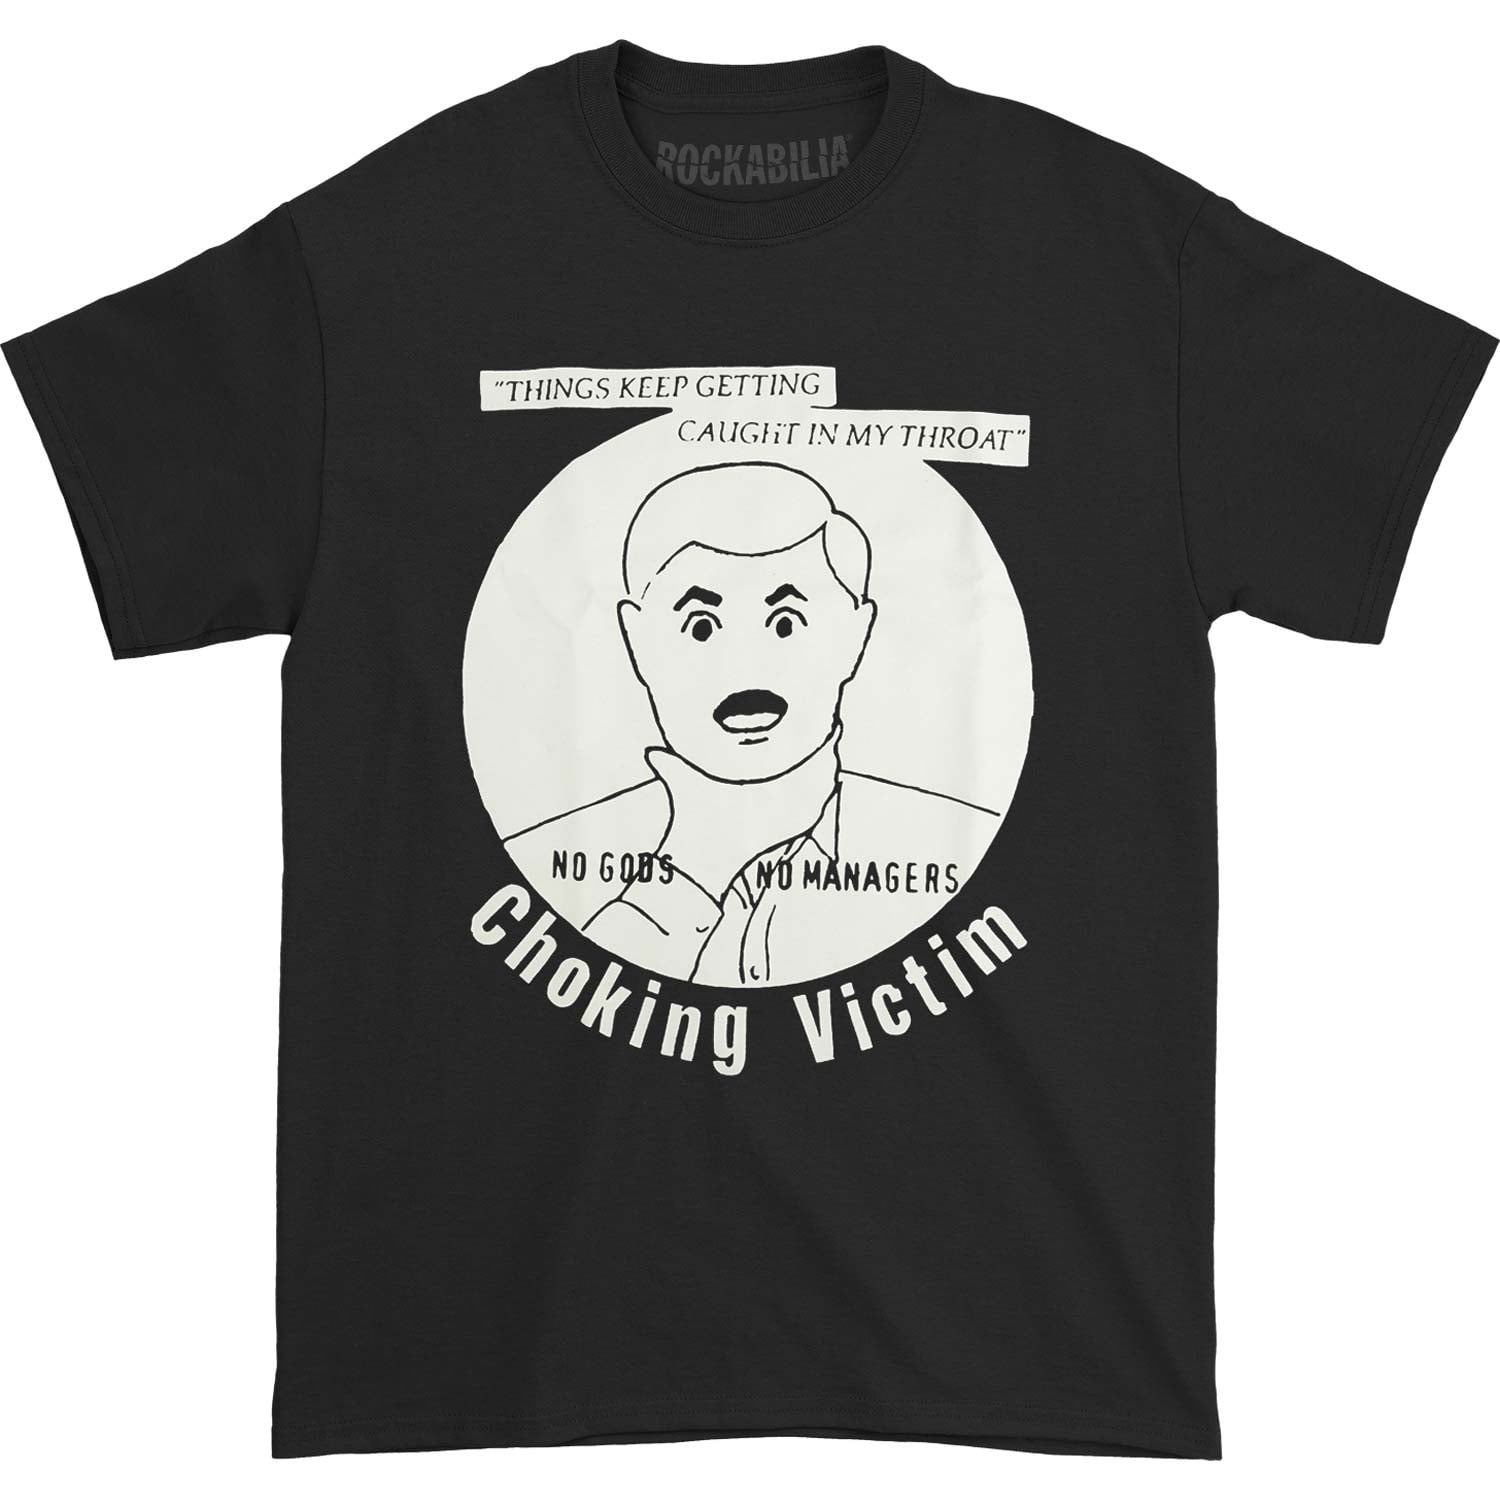 Choking Victim No Gods No Managers Official Tee T-Shirt Mens